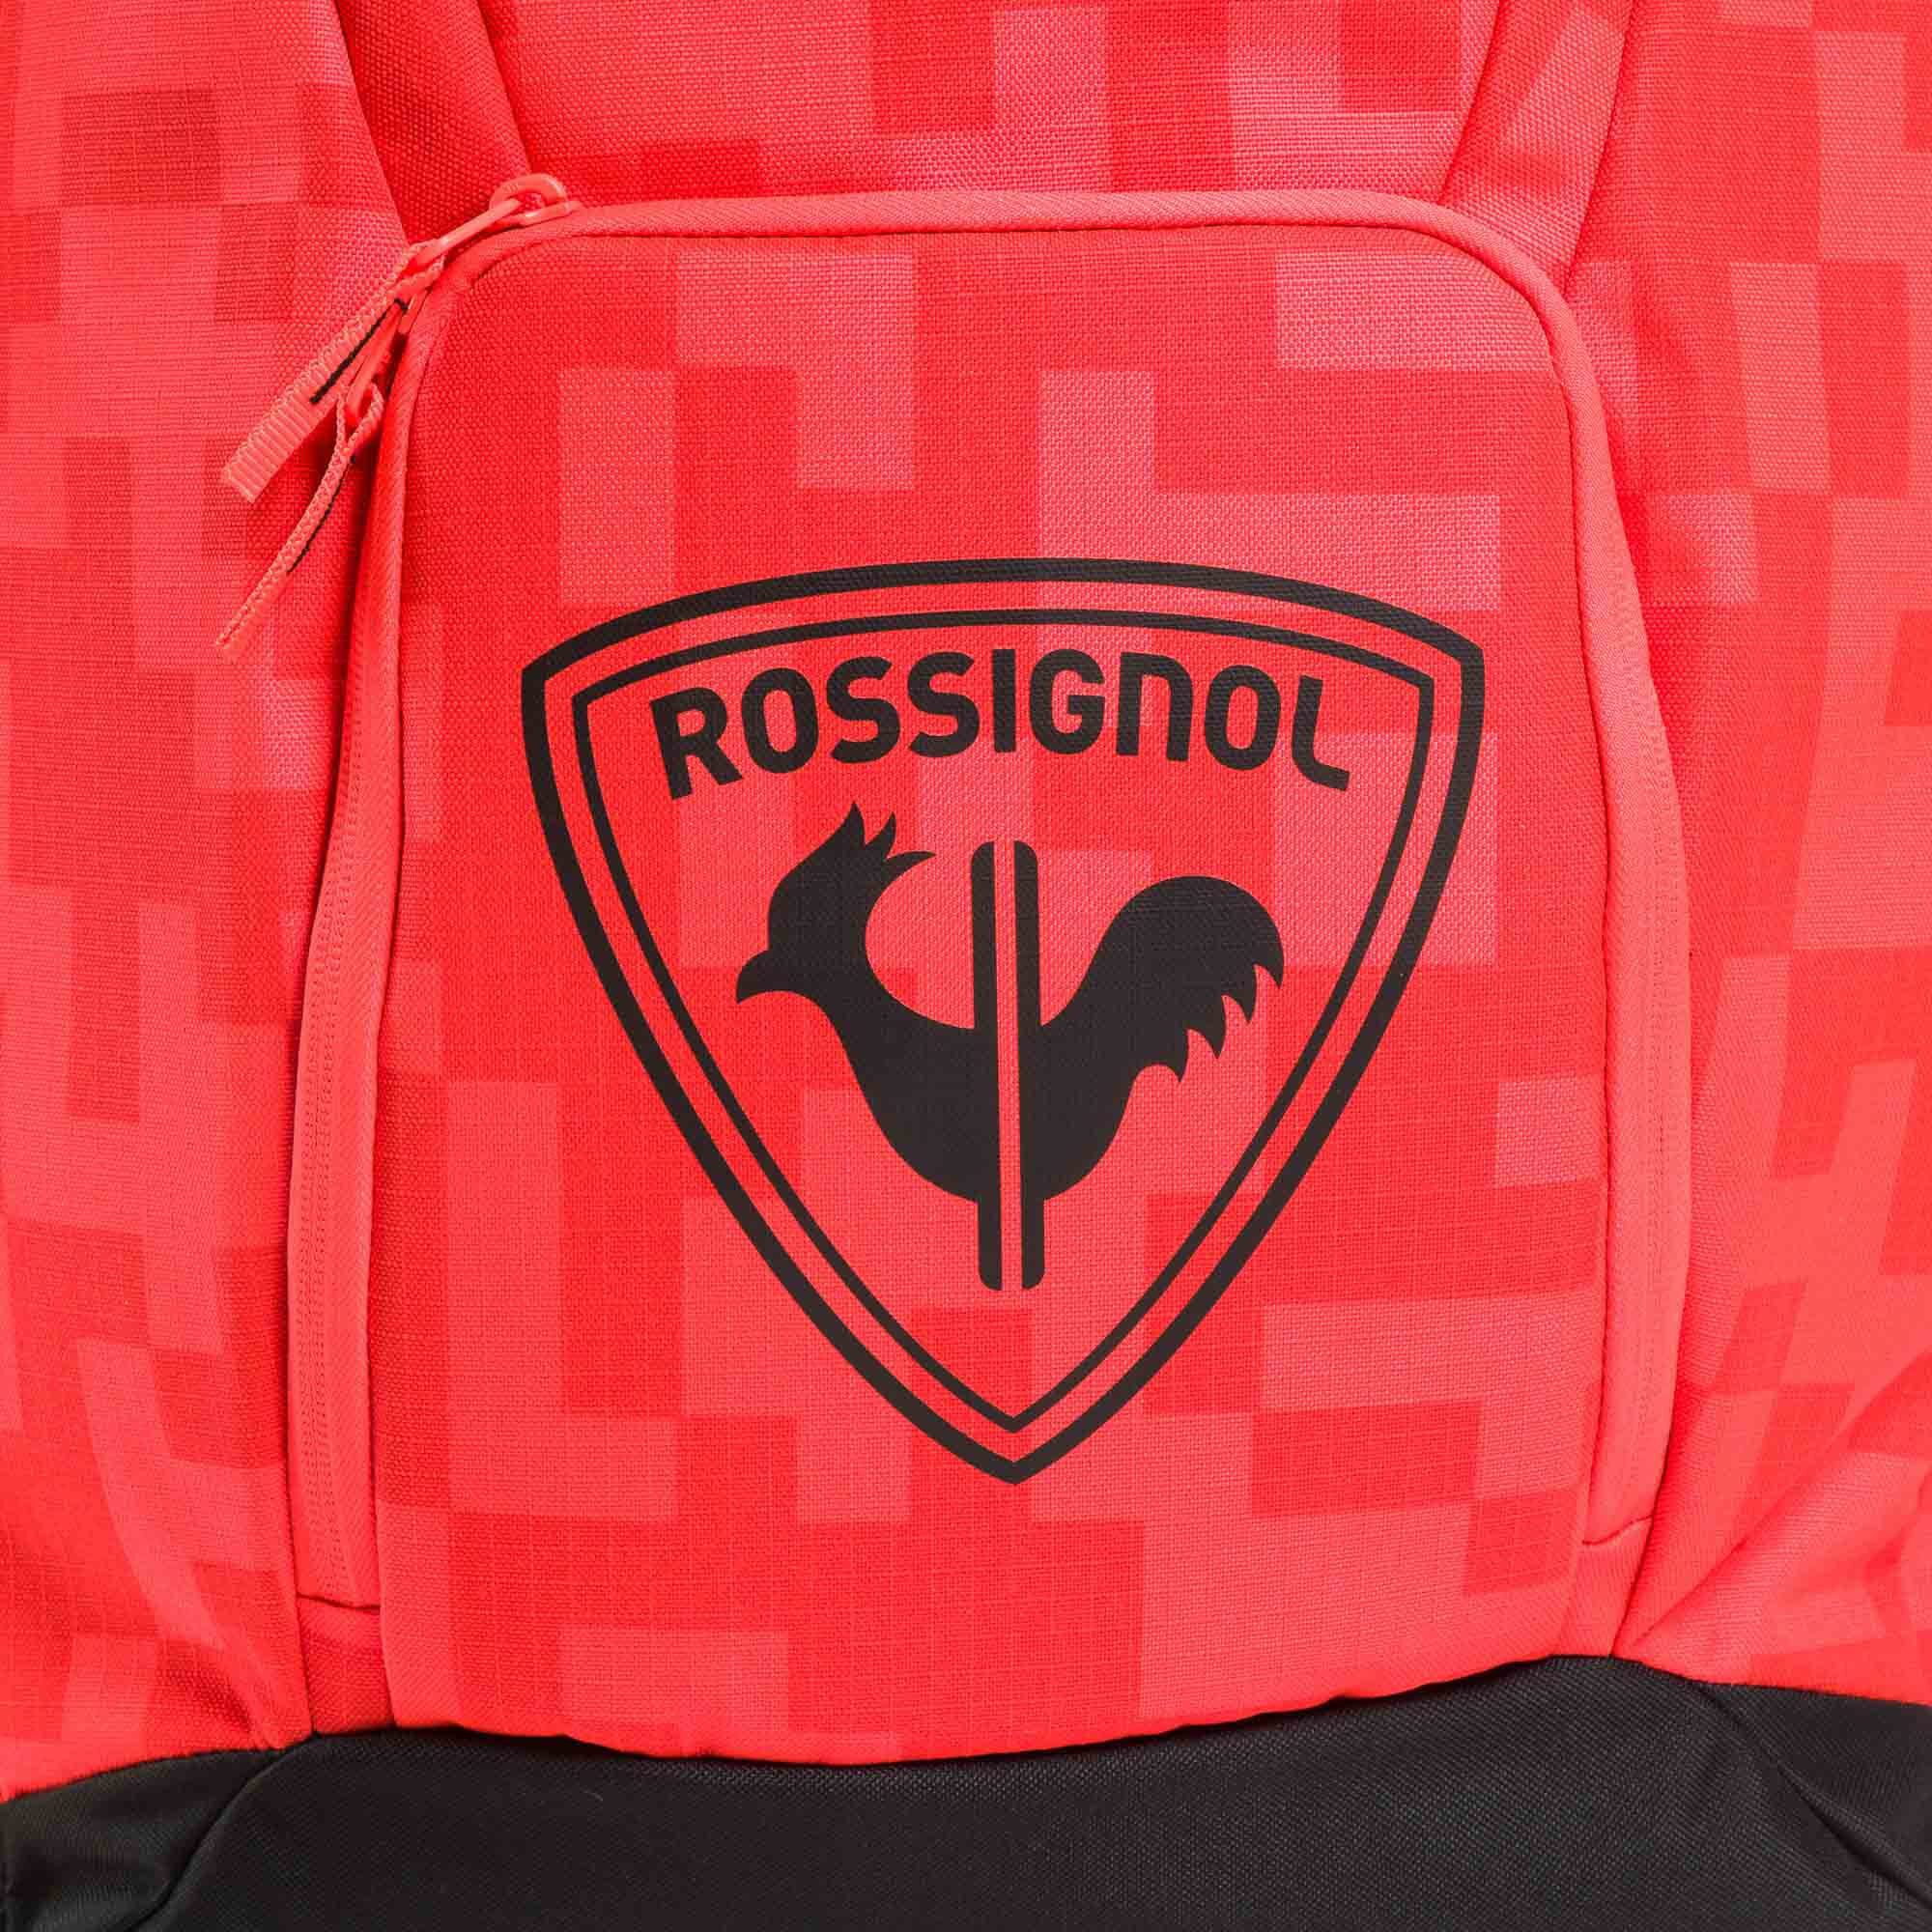 Rossignol Unisex bag Hero Small Athletes | Bags & Backpacks Unisex